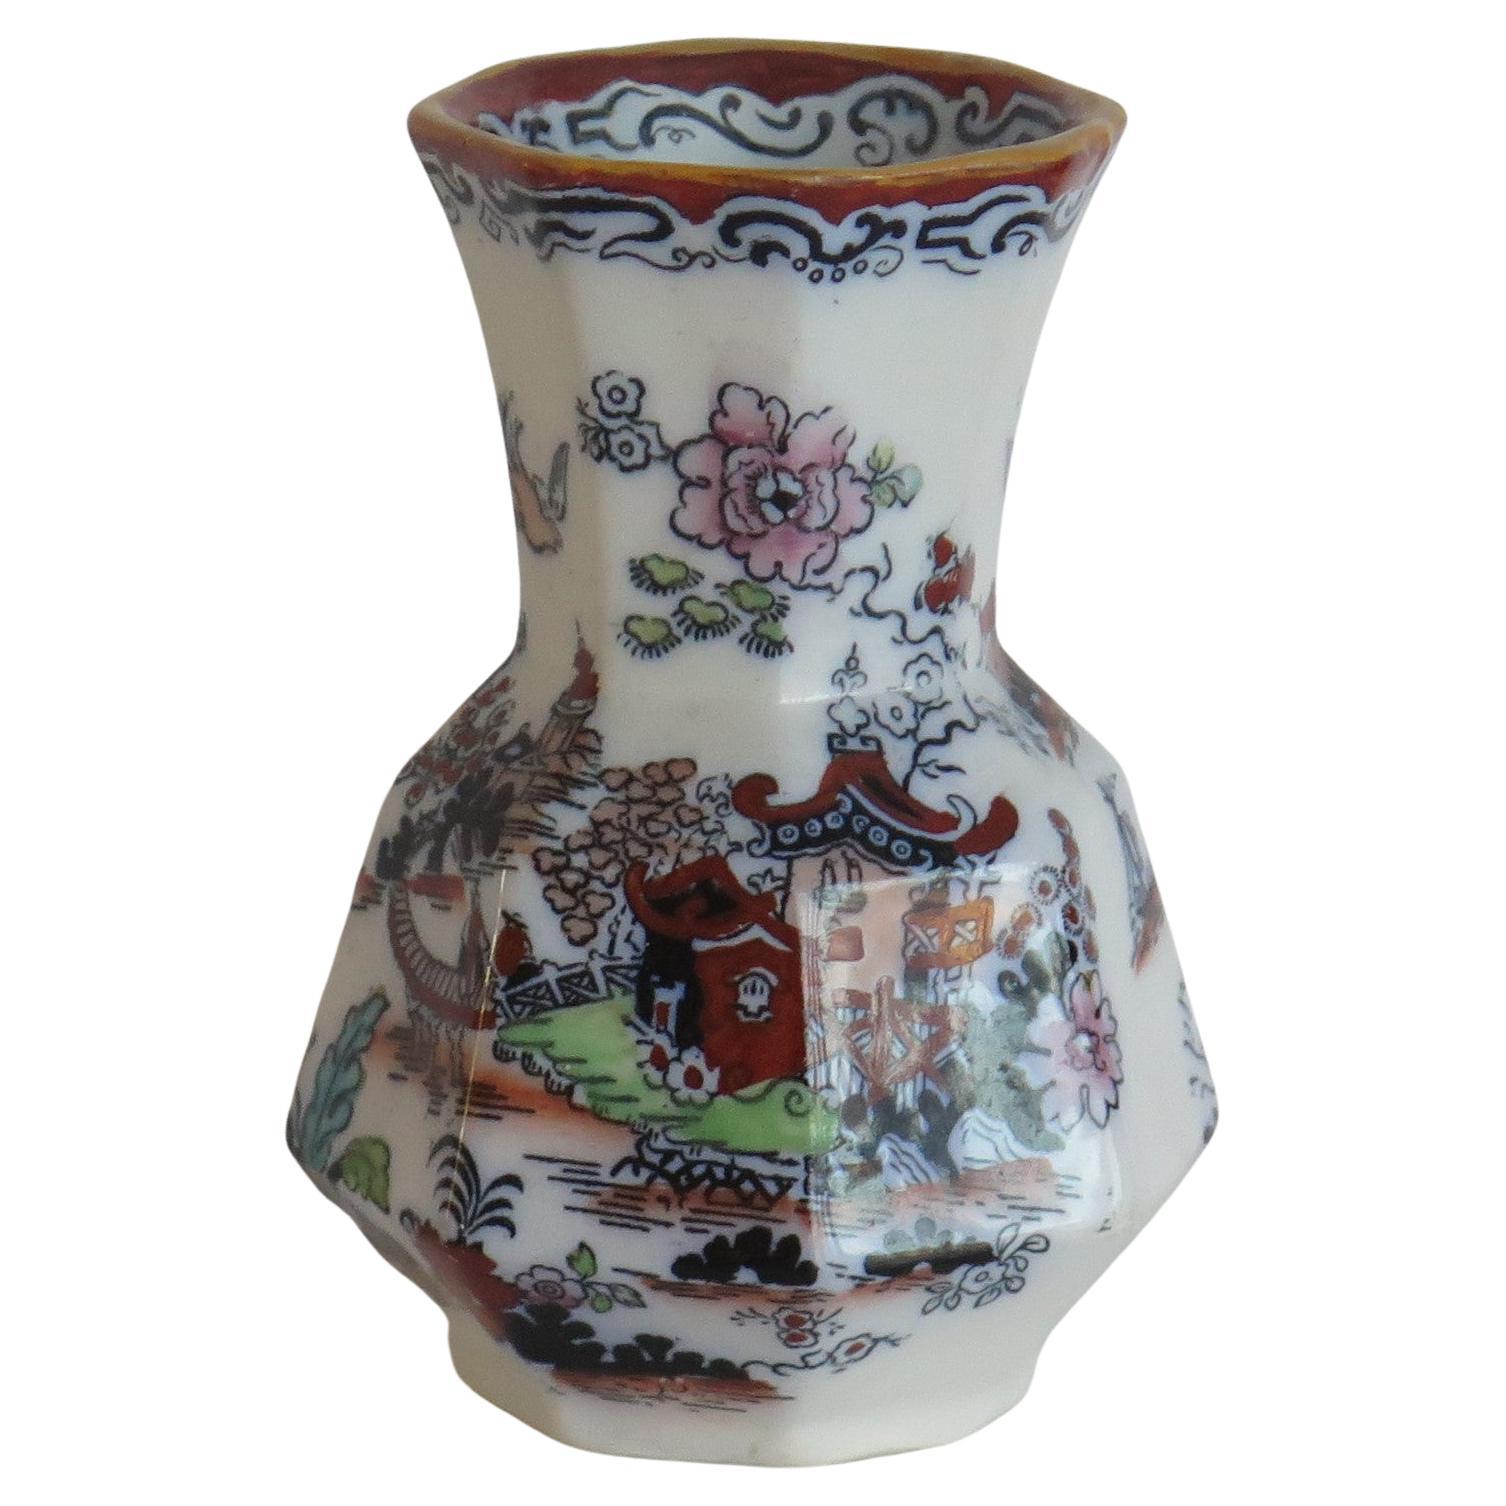 Mason's Ironstone Spill Vase or Beaker in Japan Willow Pattern, circa 1850